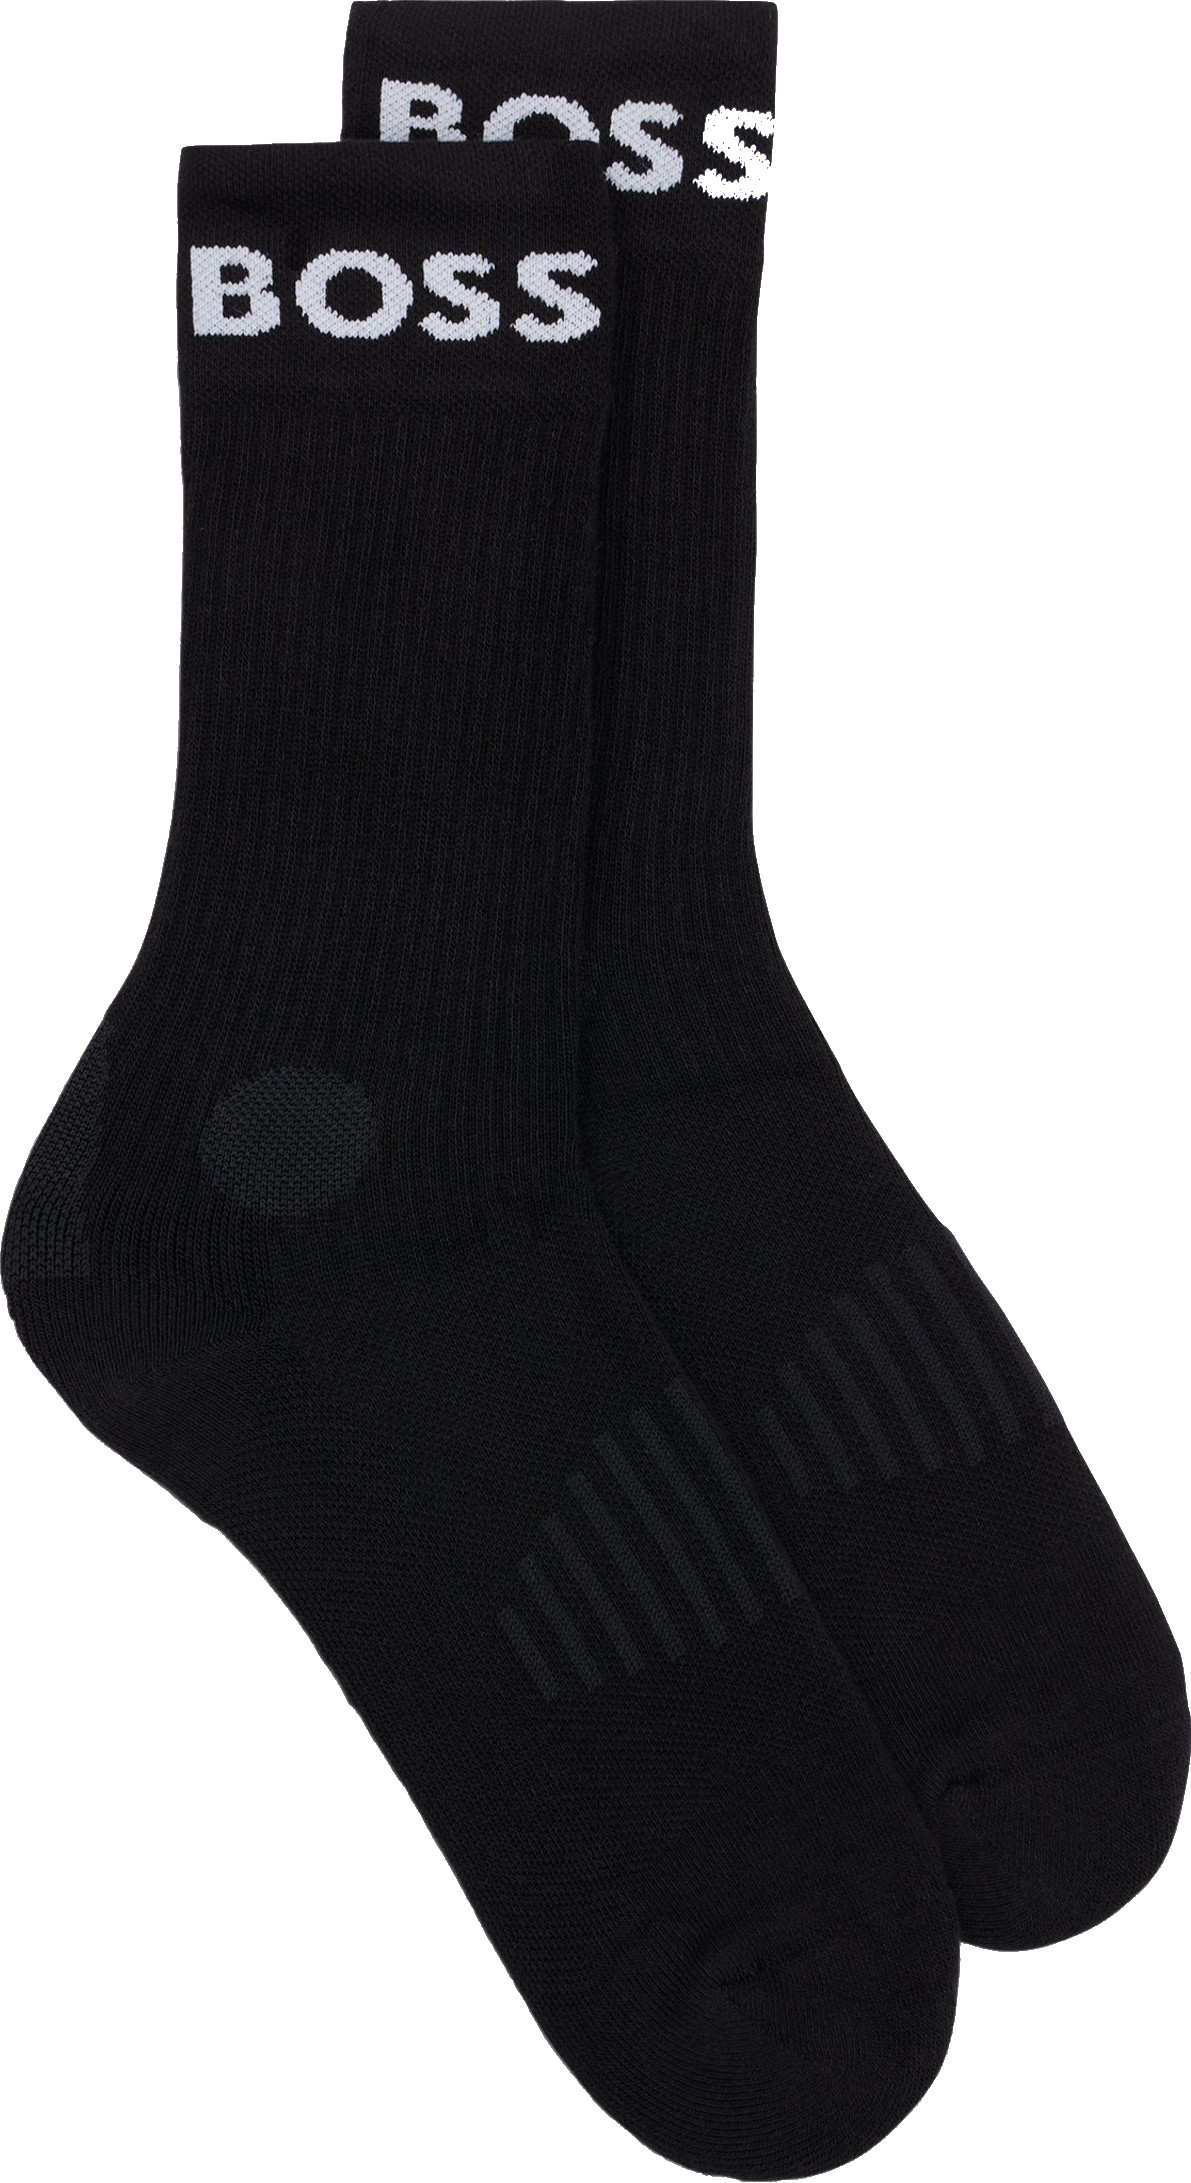 Hugo Boss 2 PACK - pánske ponožky BOSS 50469747-001 43-46